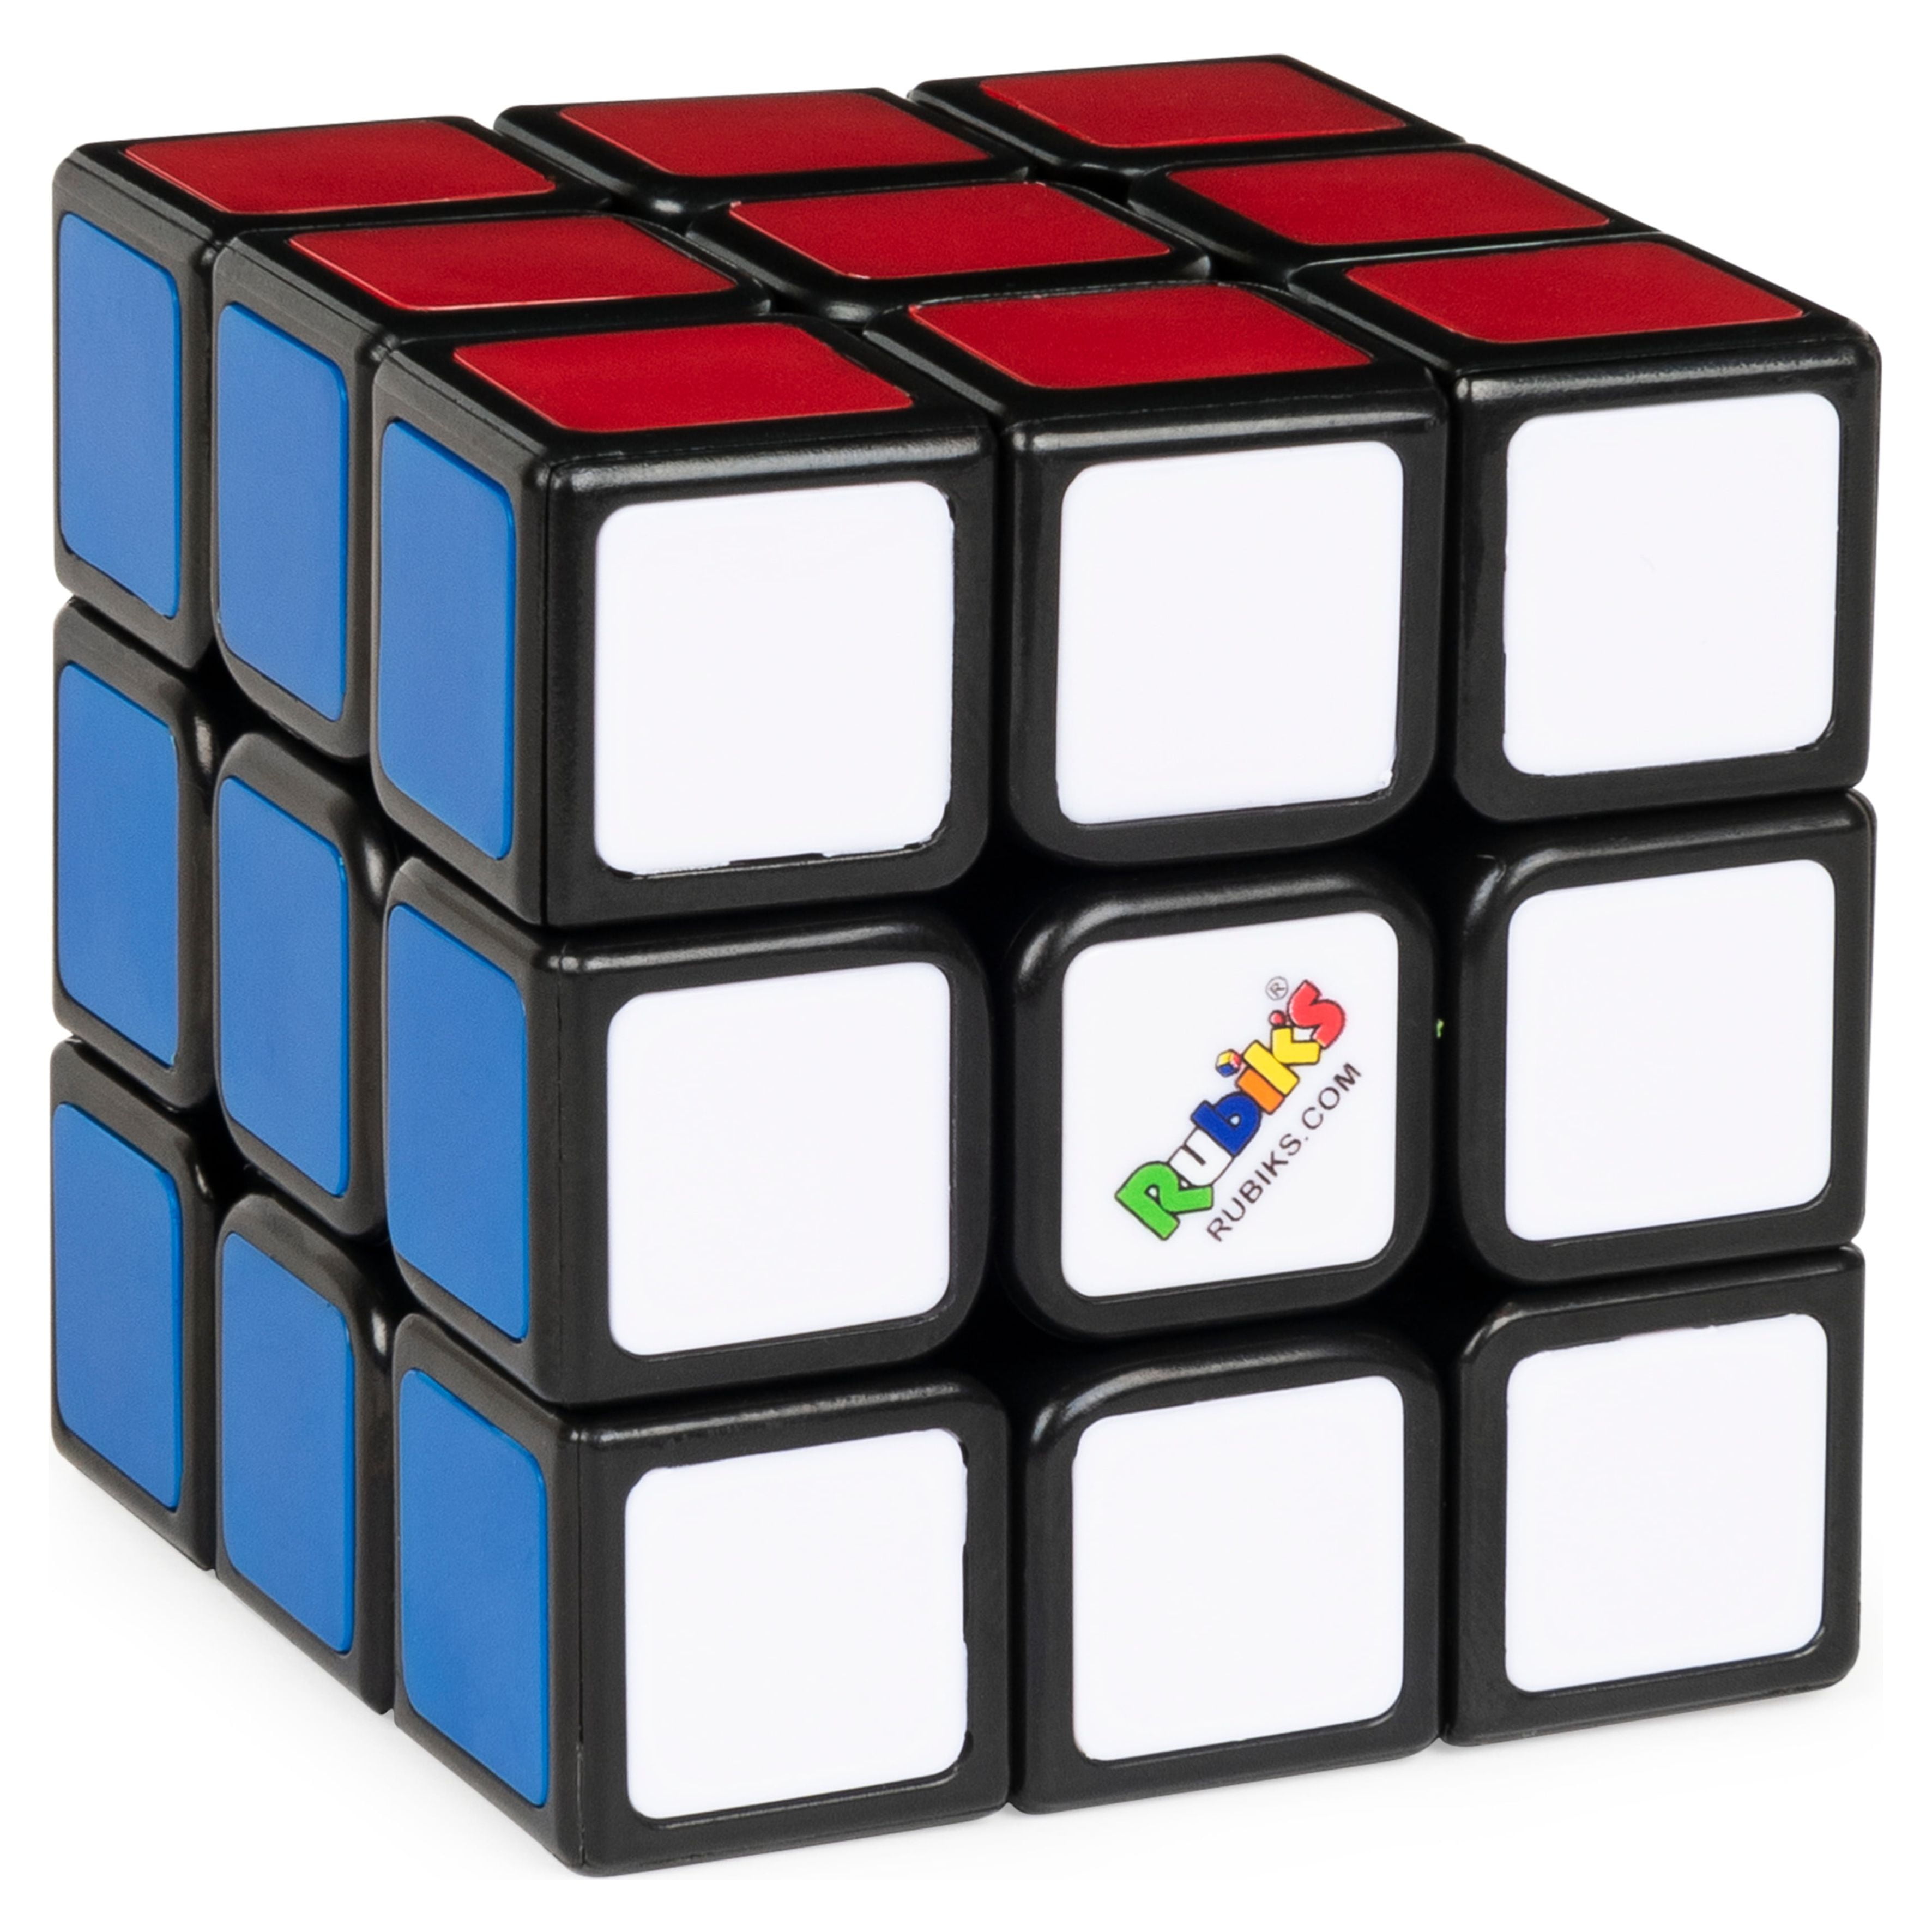 Rubik’s Cube, The Original 3x3 Color-Matching Puzzle $9.10